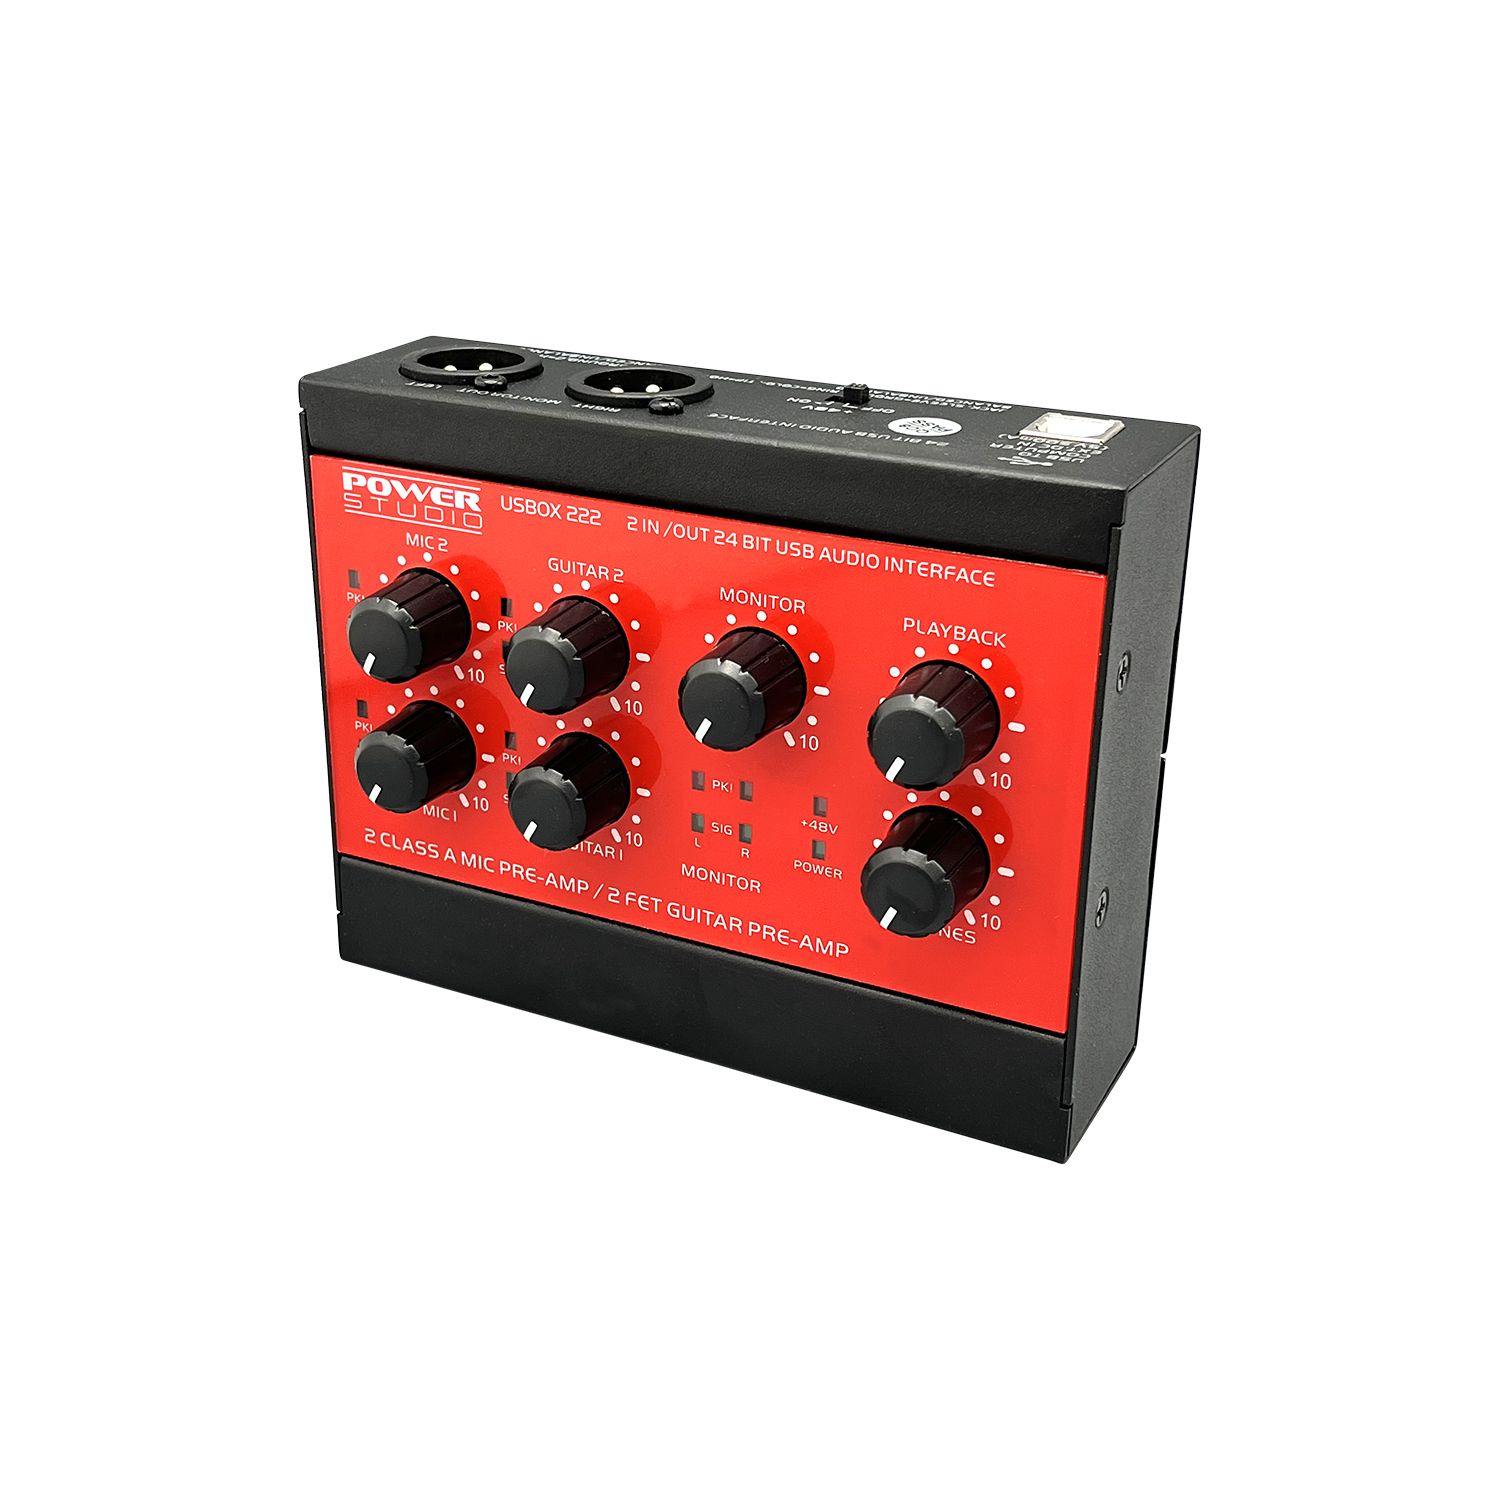 Power Studio Usbox 222 - USB audio-interface - Variation 2